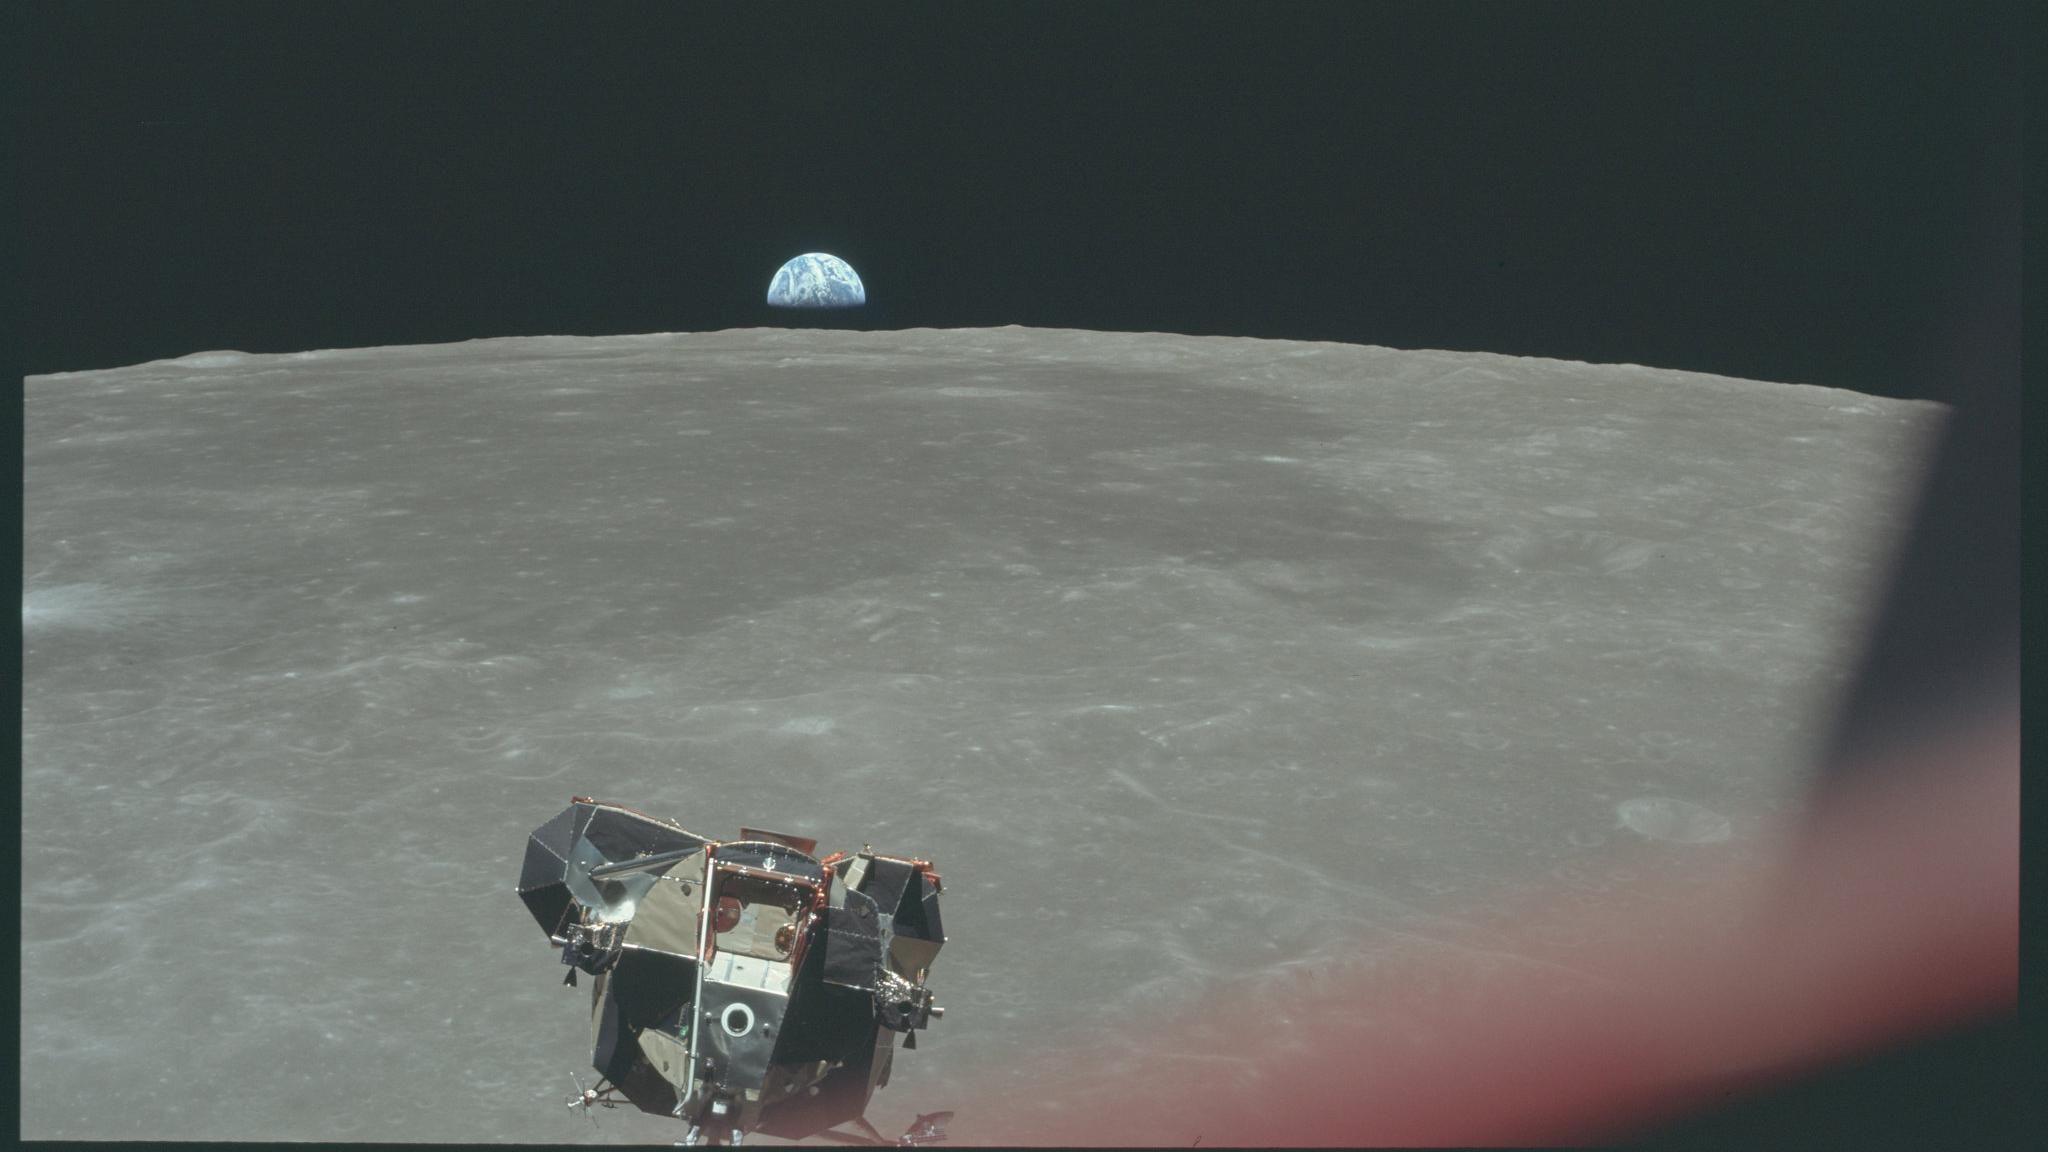 Аполлон 11: где находится лунный модуль Аполлона 11